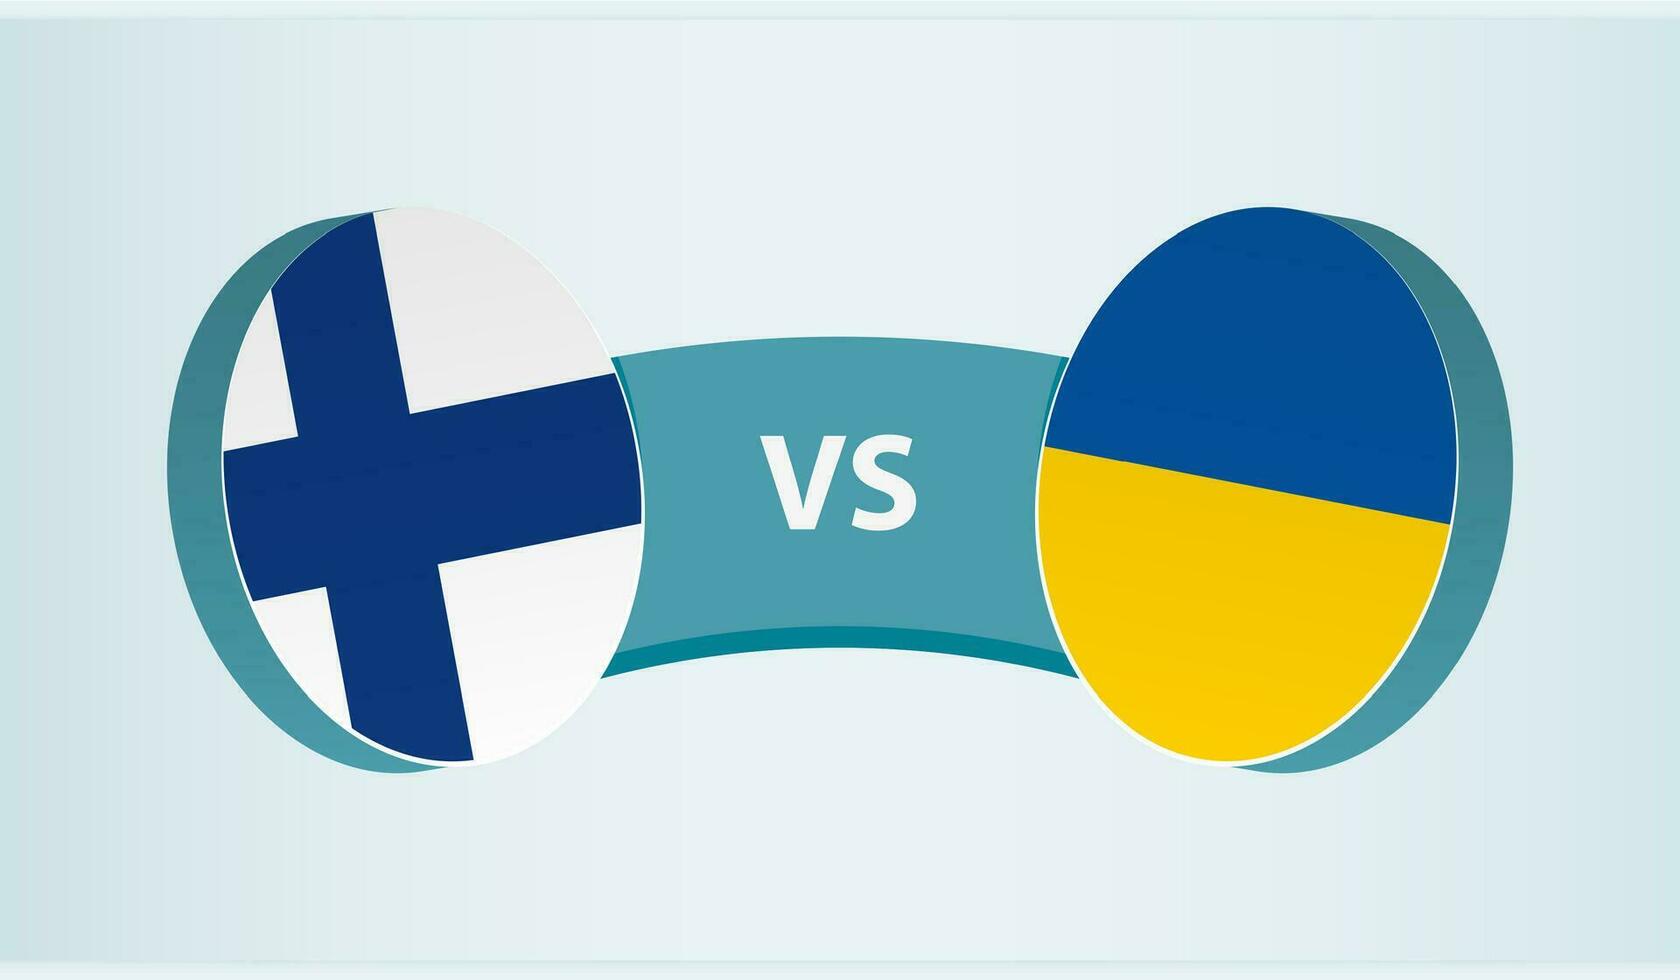 Finland versus Ukraine, team sports competition concept. vector